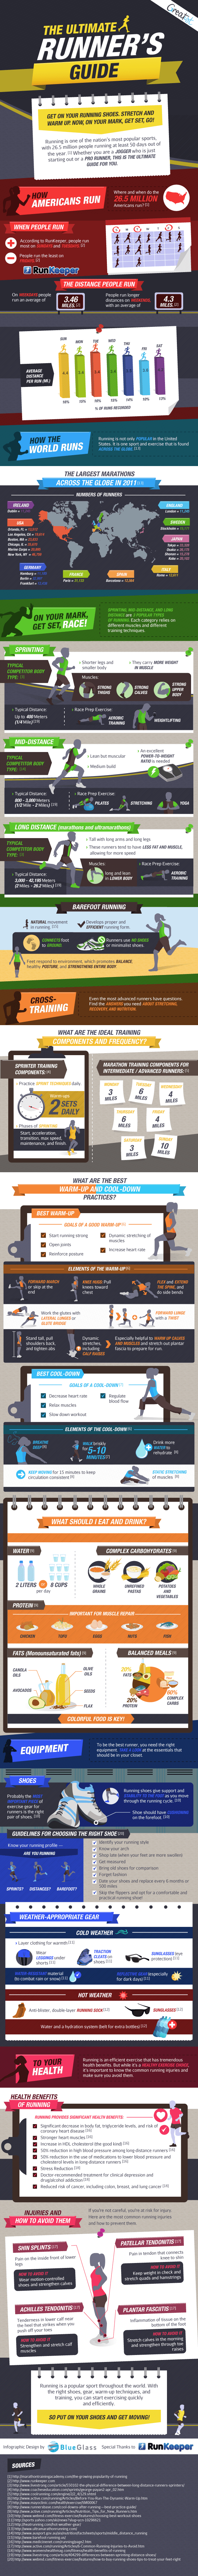 infografia sobre runners